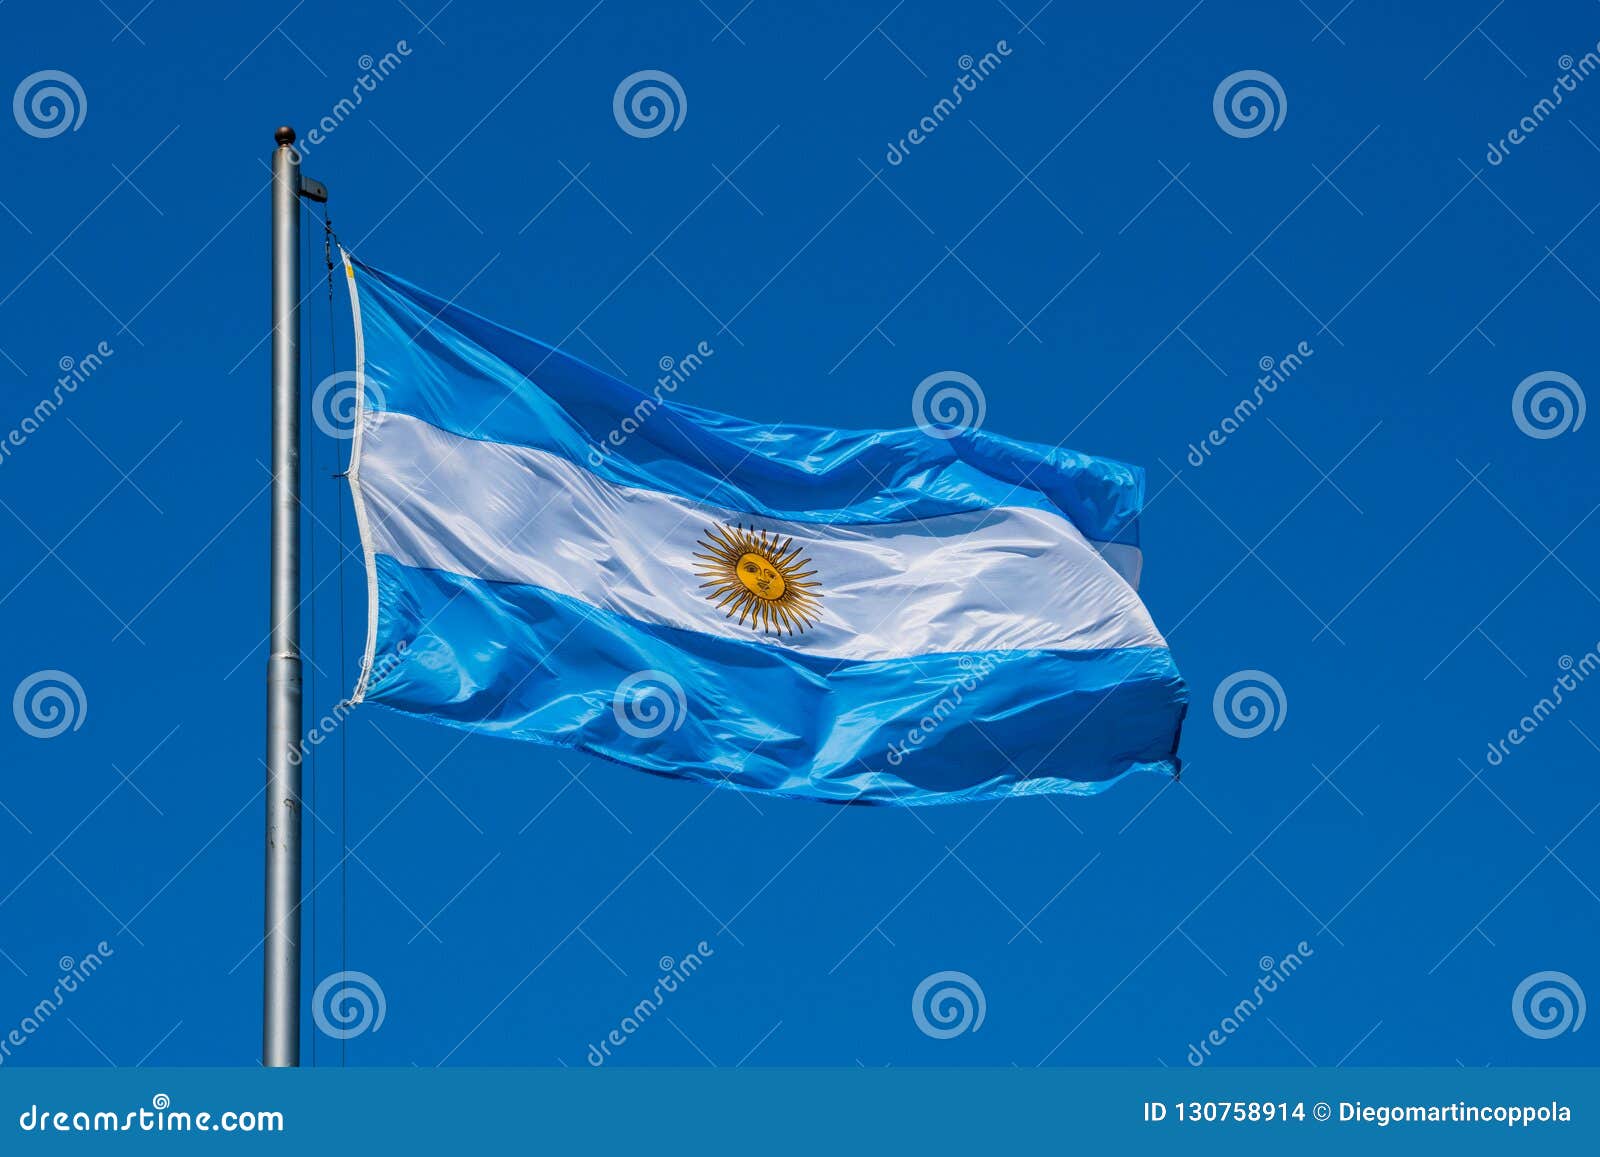 the flag of argentina bandera argentina - bandera nacional